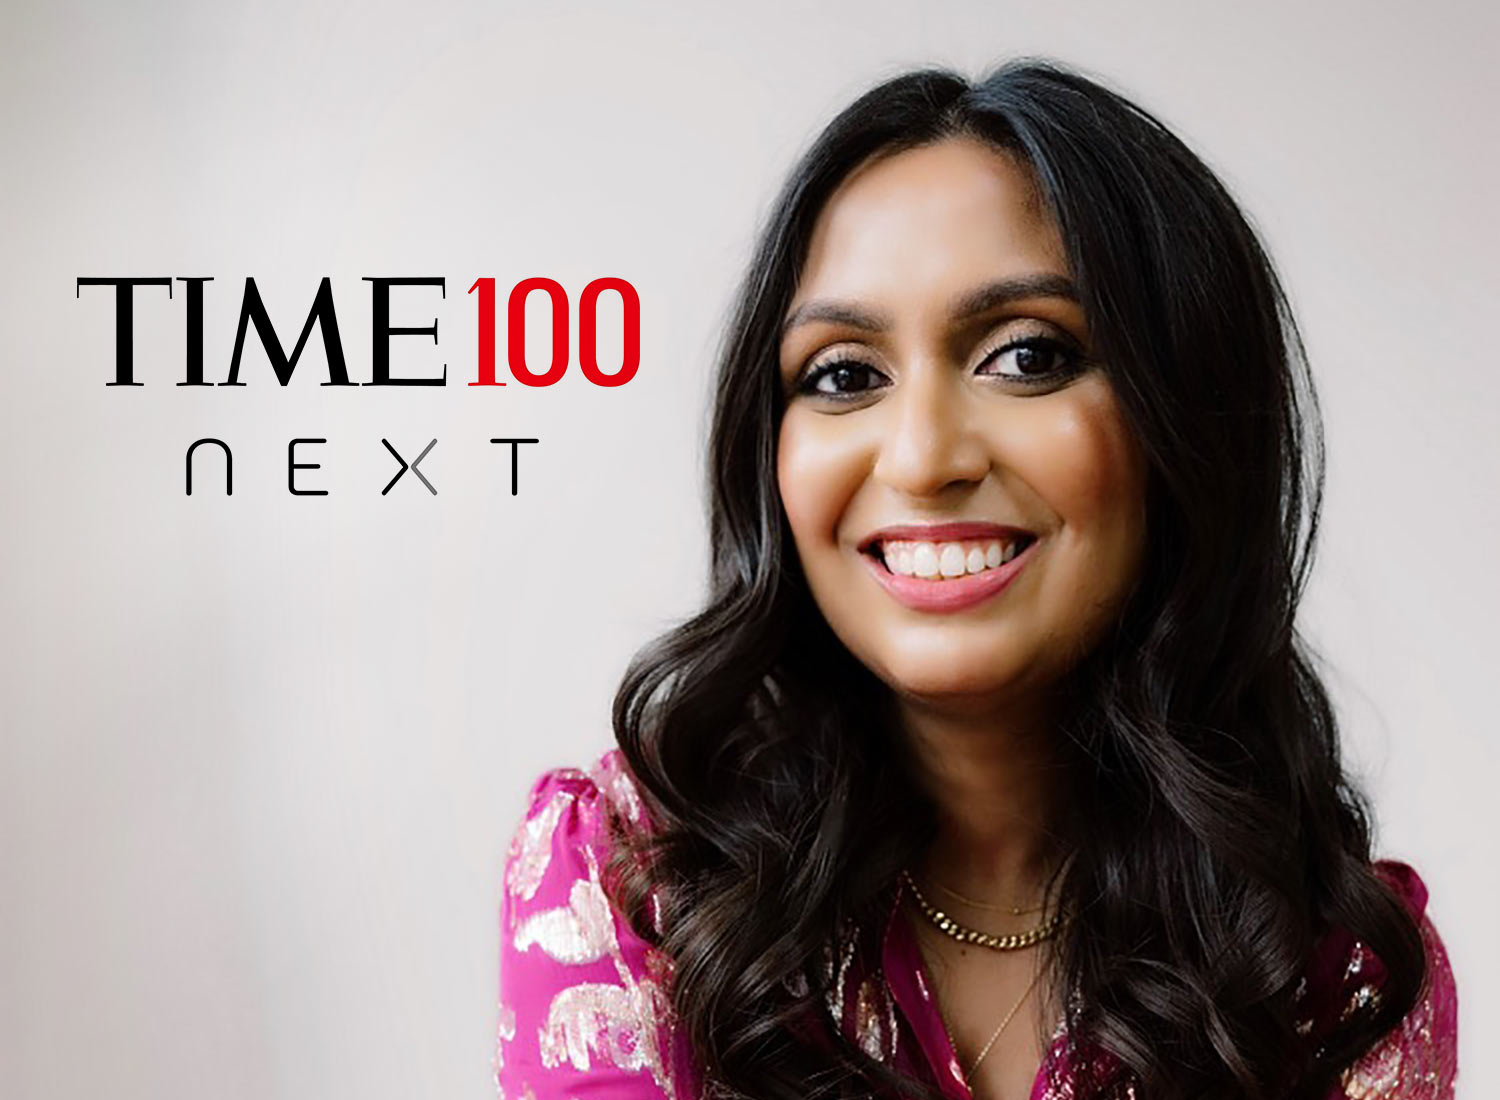 TIME100 Next honoree Shikha Gupta, Executive Director, Get Us PPE